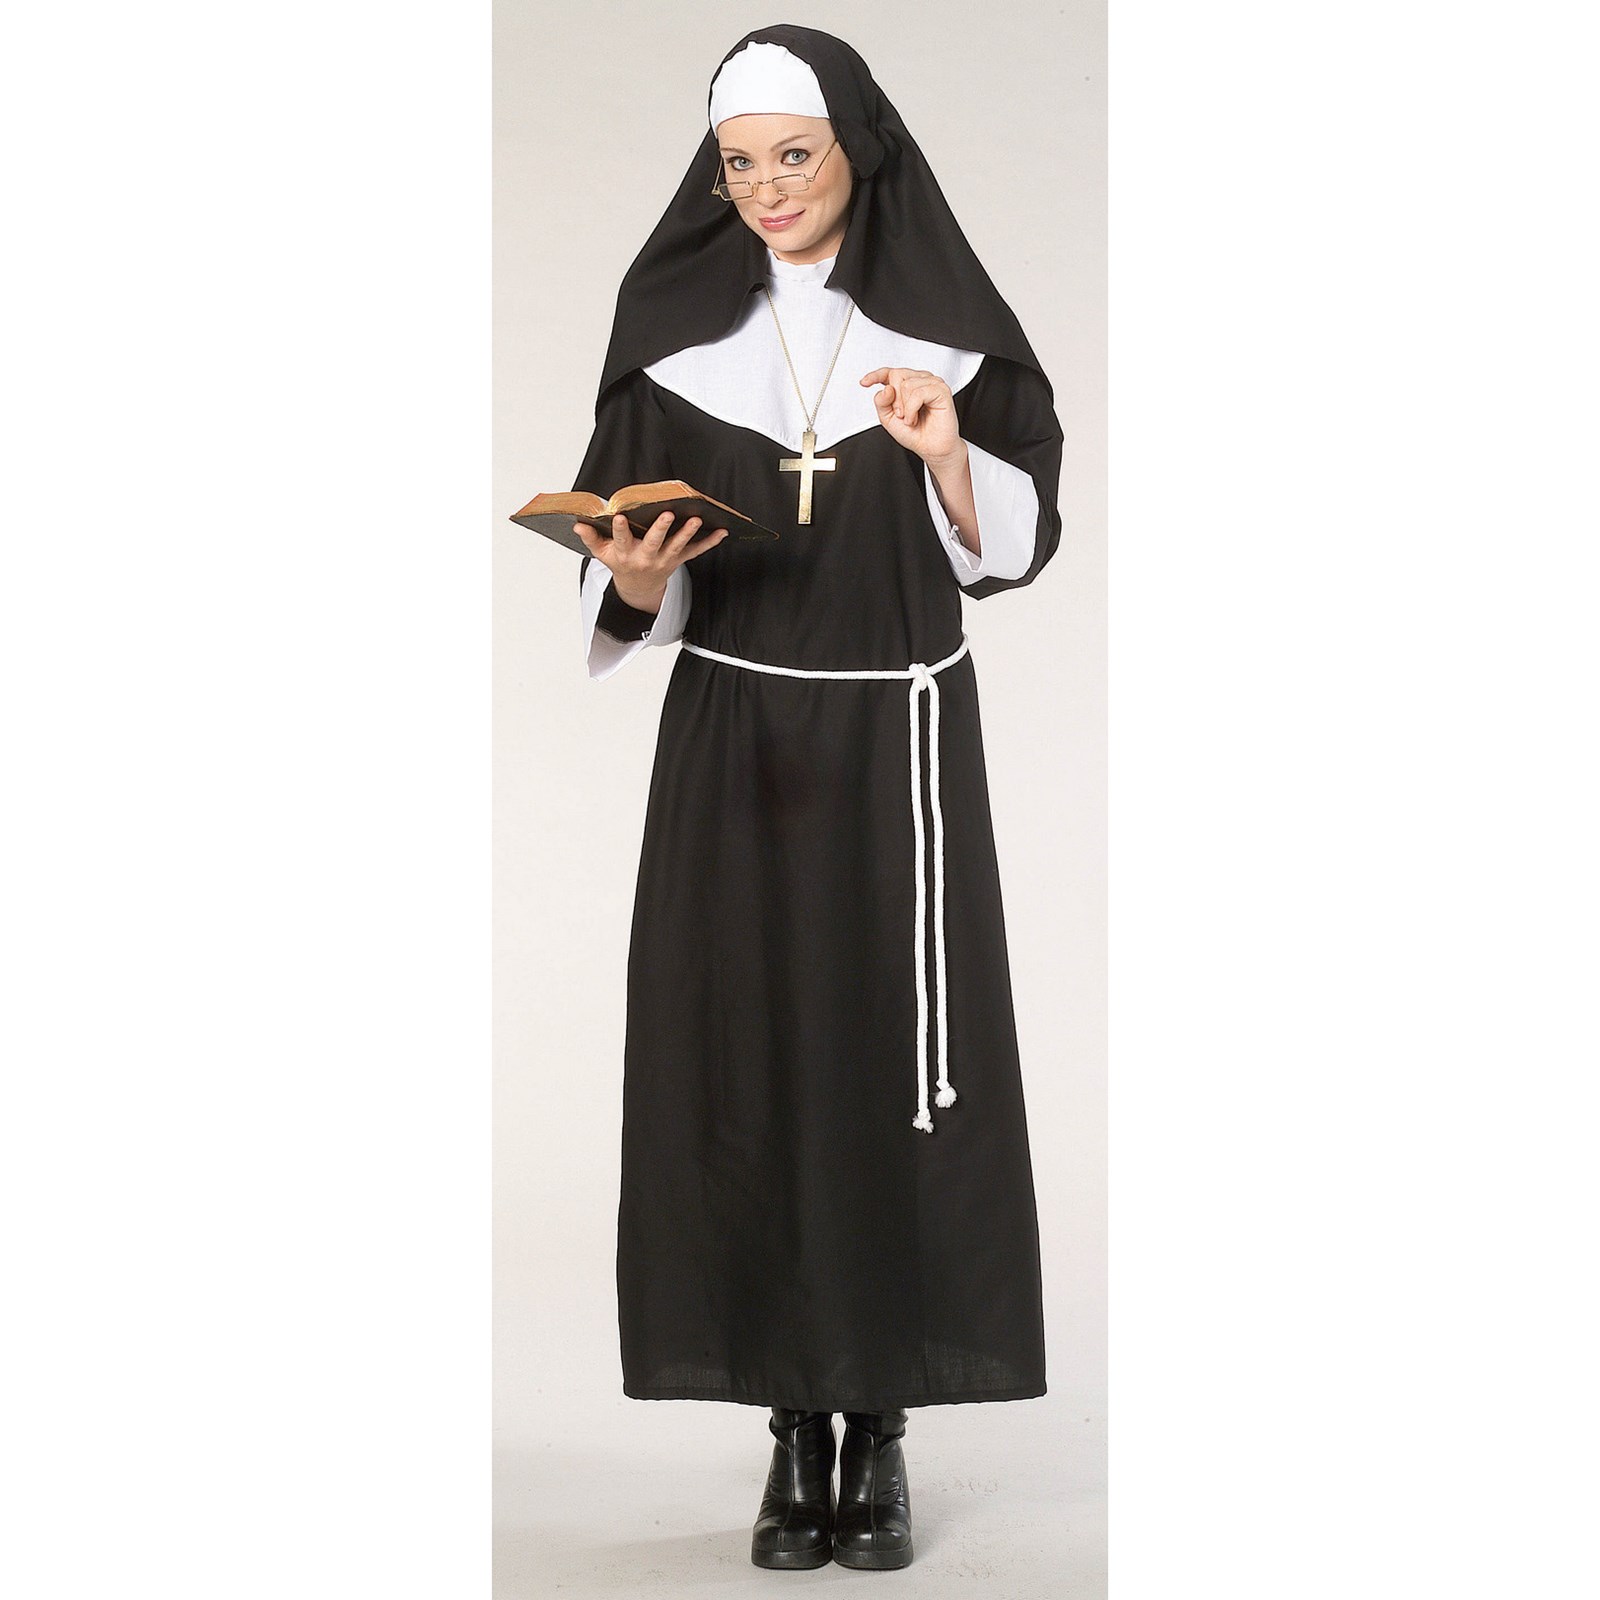 Nun Womens Costume - image 1 of 2